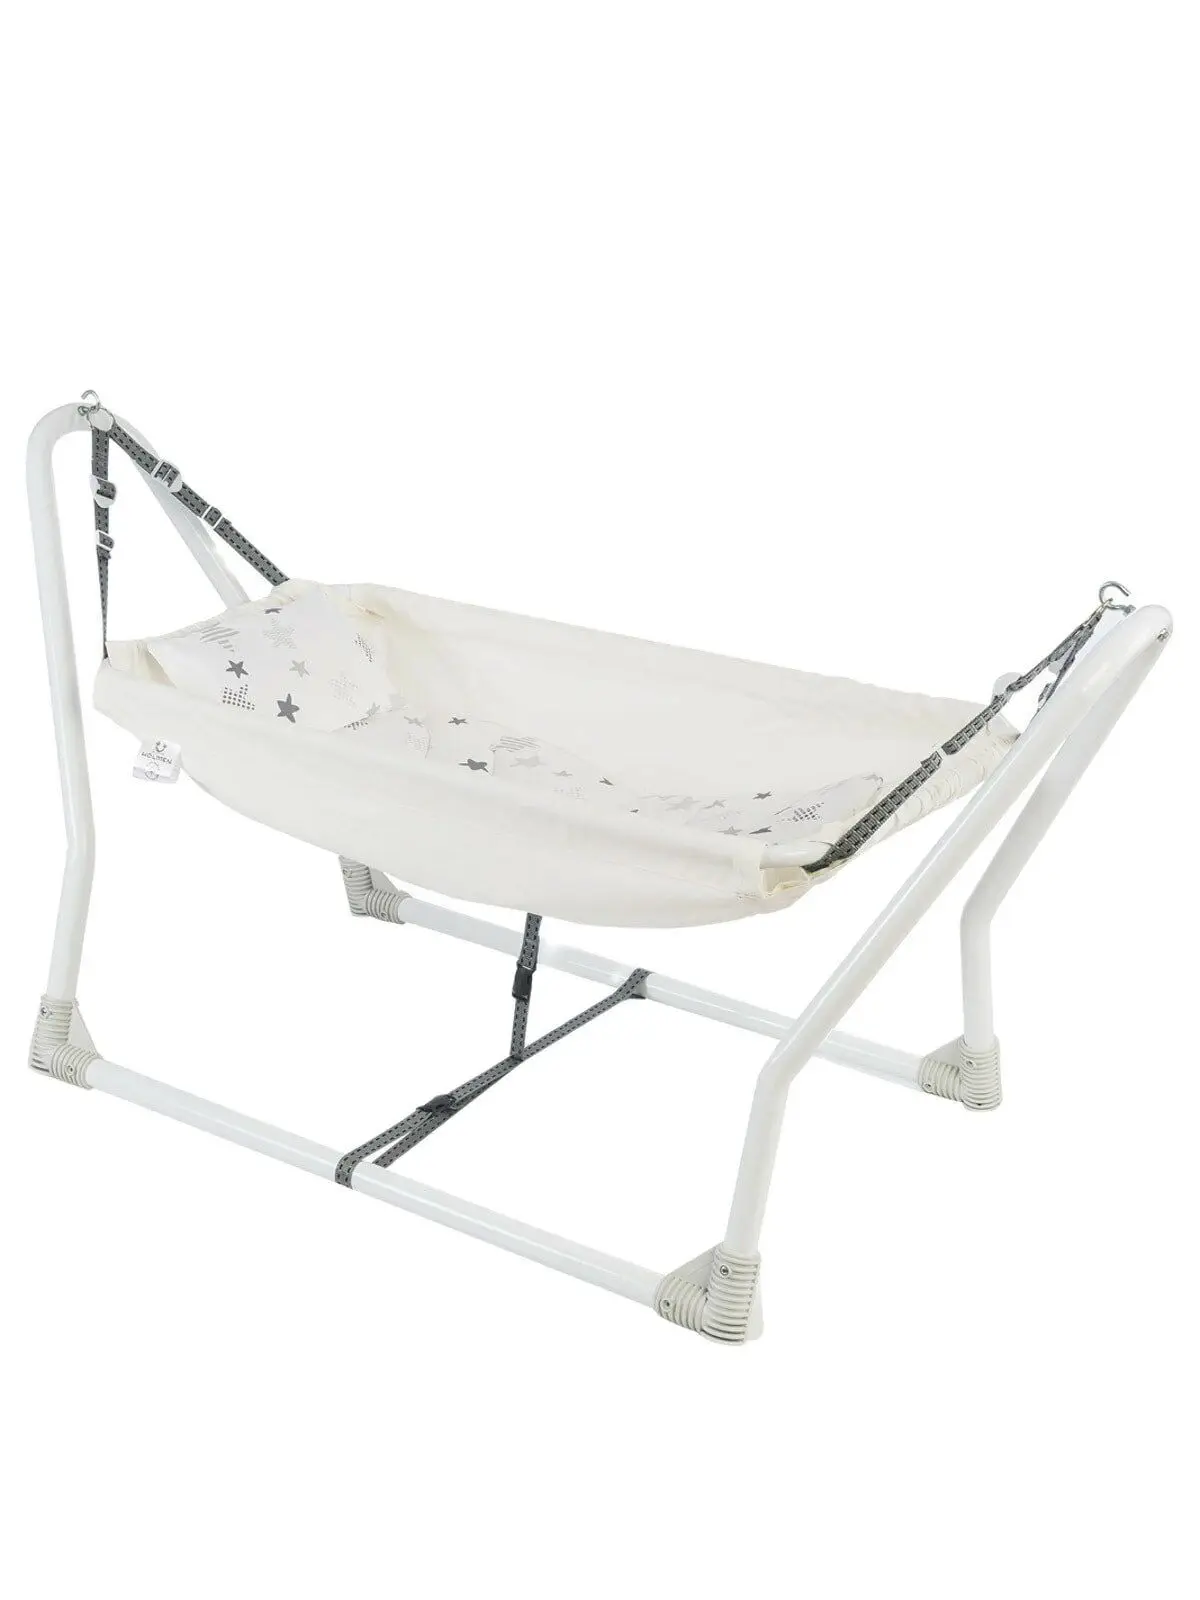 Portable Folding Baby Hammock Crib Furniture New Born Sleeping Swing Rocking Yatıştırıcı Child Bedding Bebe Accessory Gift